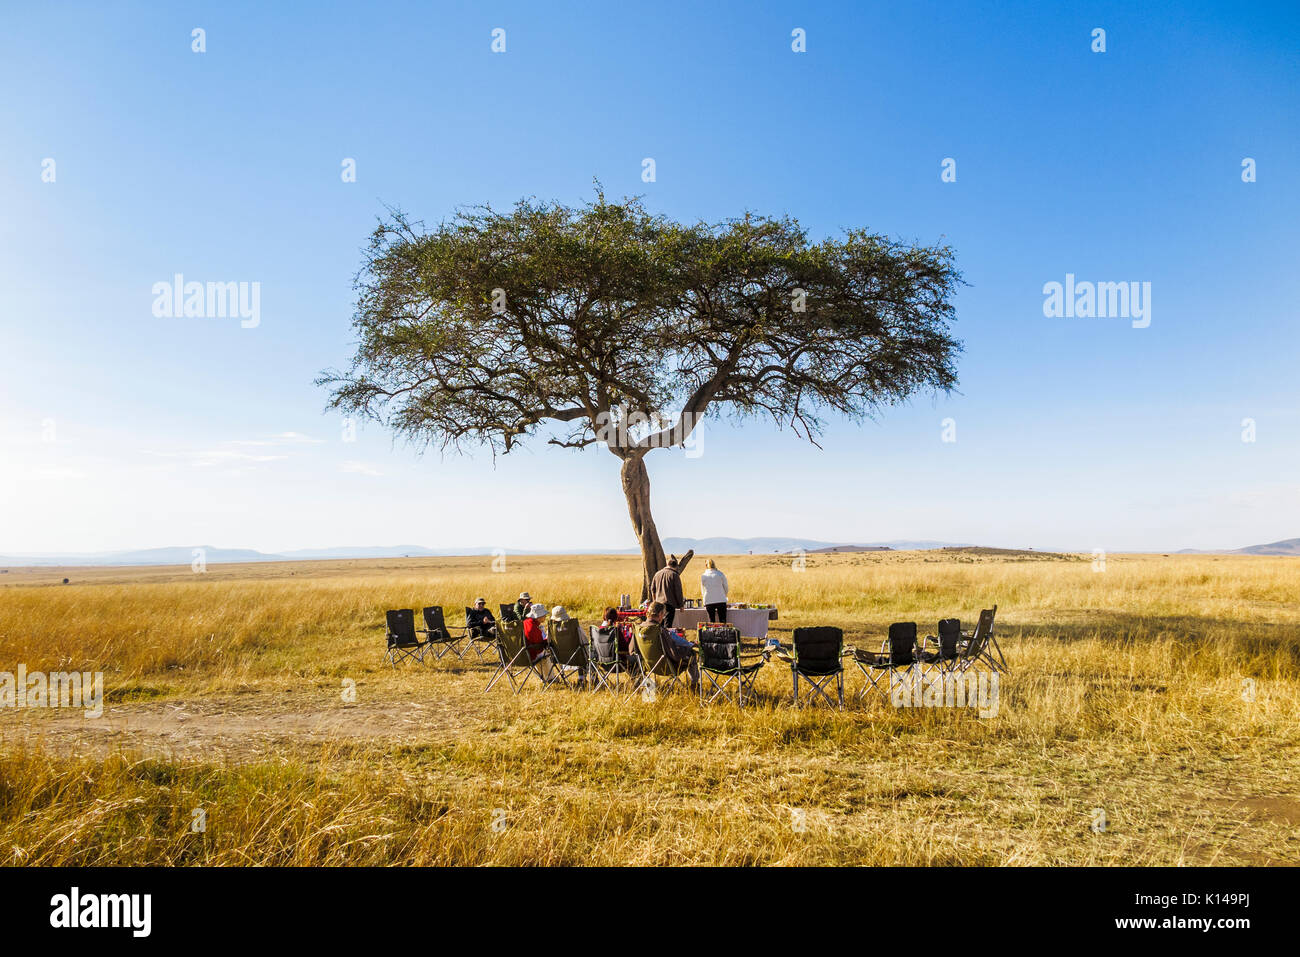 View of open air breakfast on a morning safari game drive under a typical flat-topped acacia tree in savannah grasslands plains of Masai Mara, Kenya Stock Photo